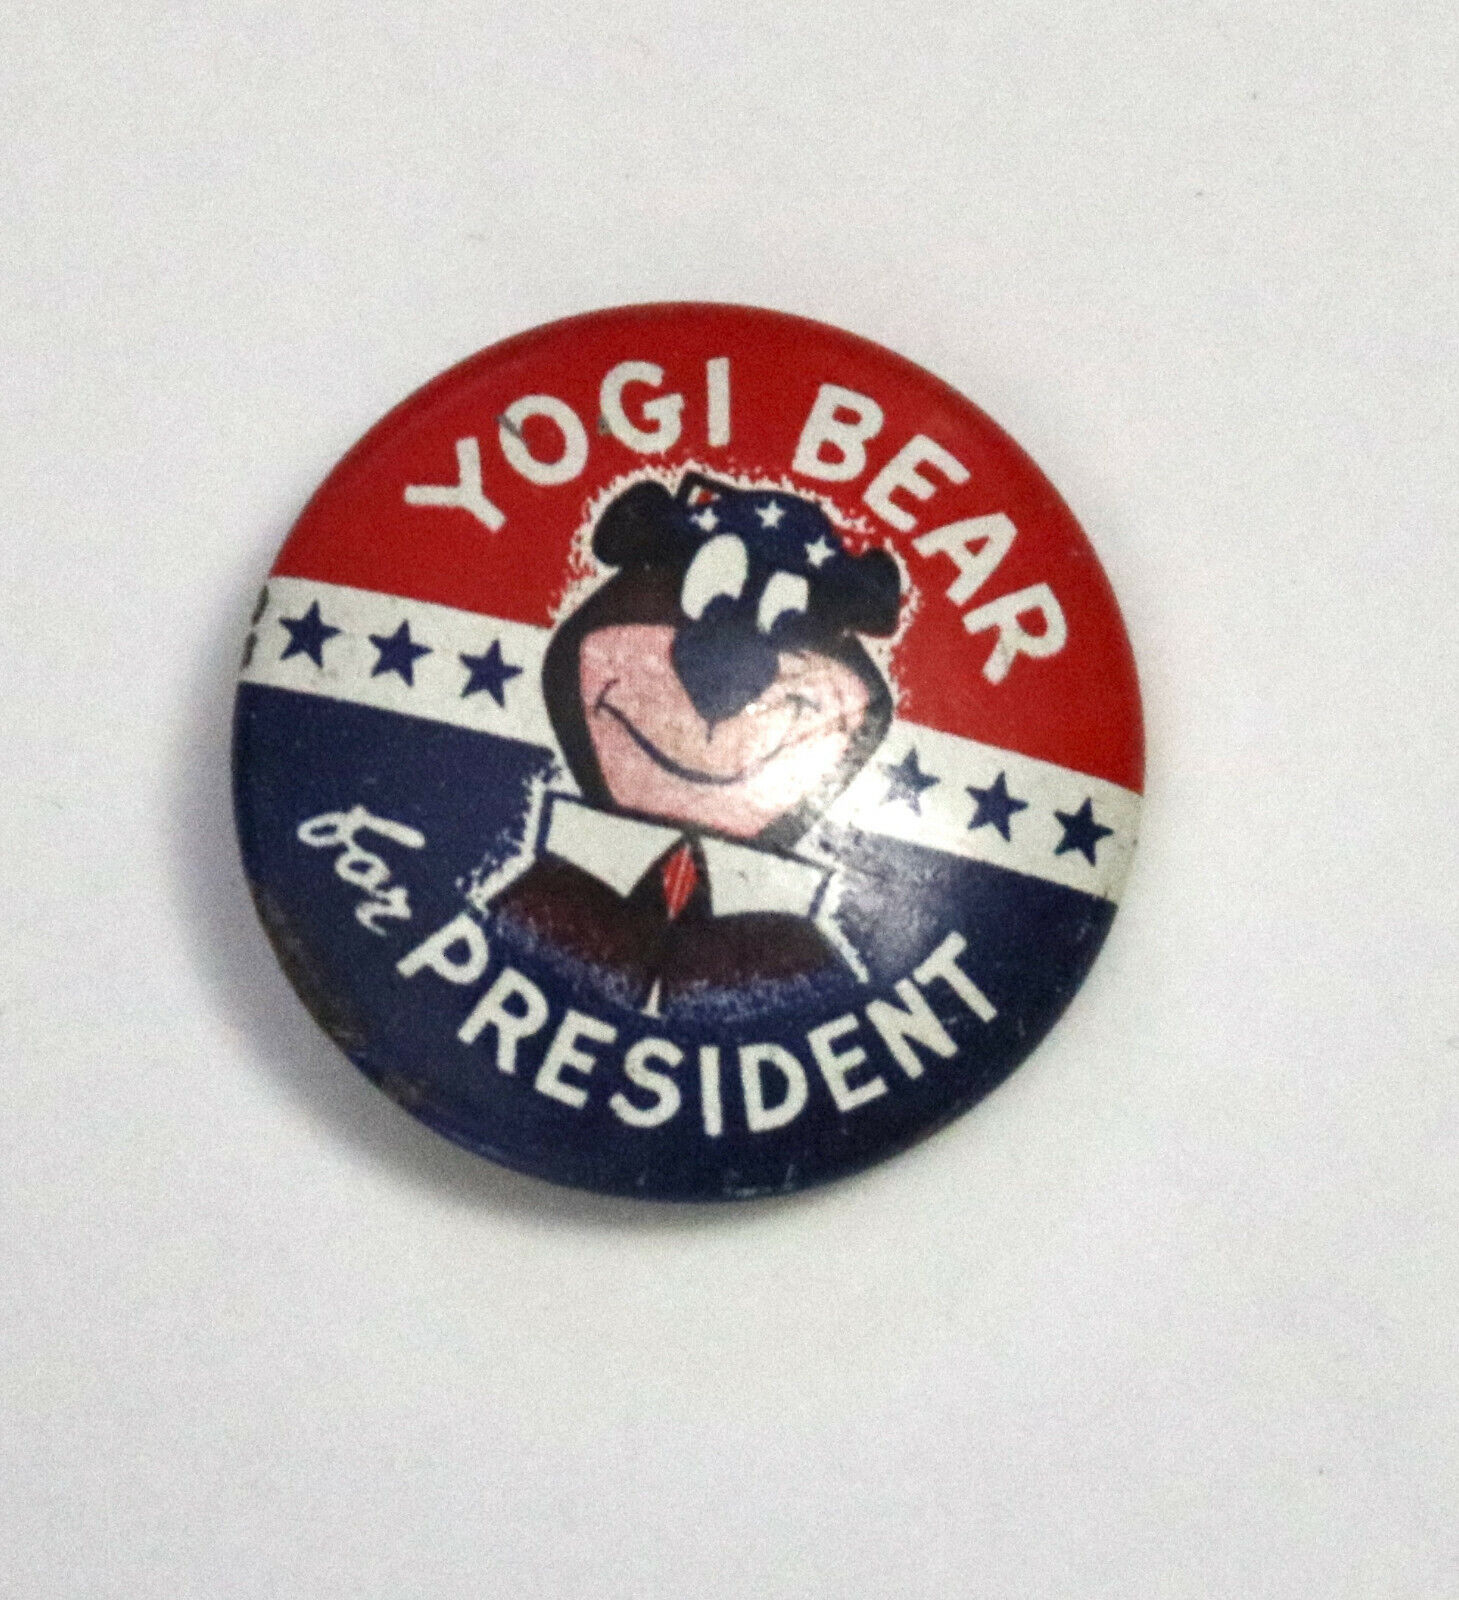 Yogi Bear For President vintage metal pin Hanna Barbera